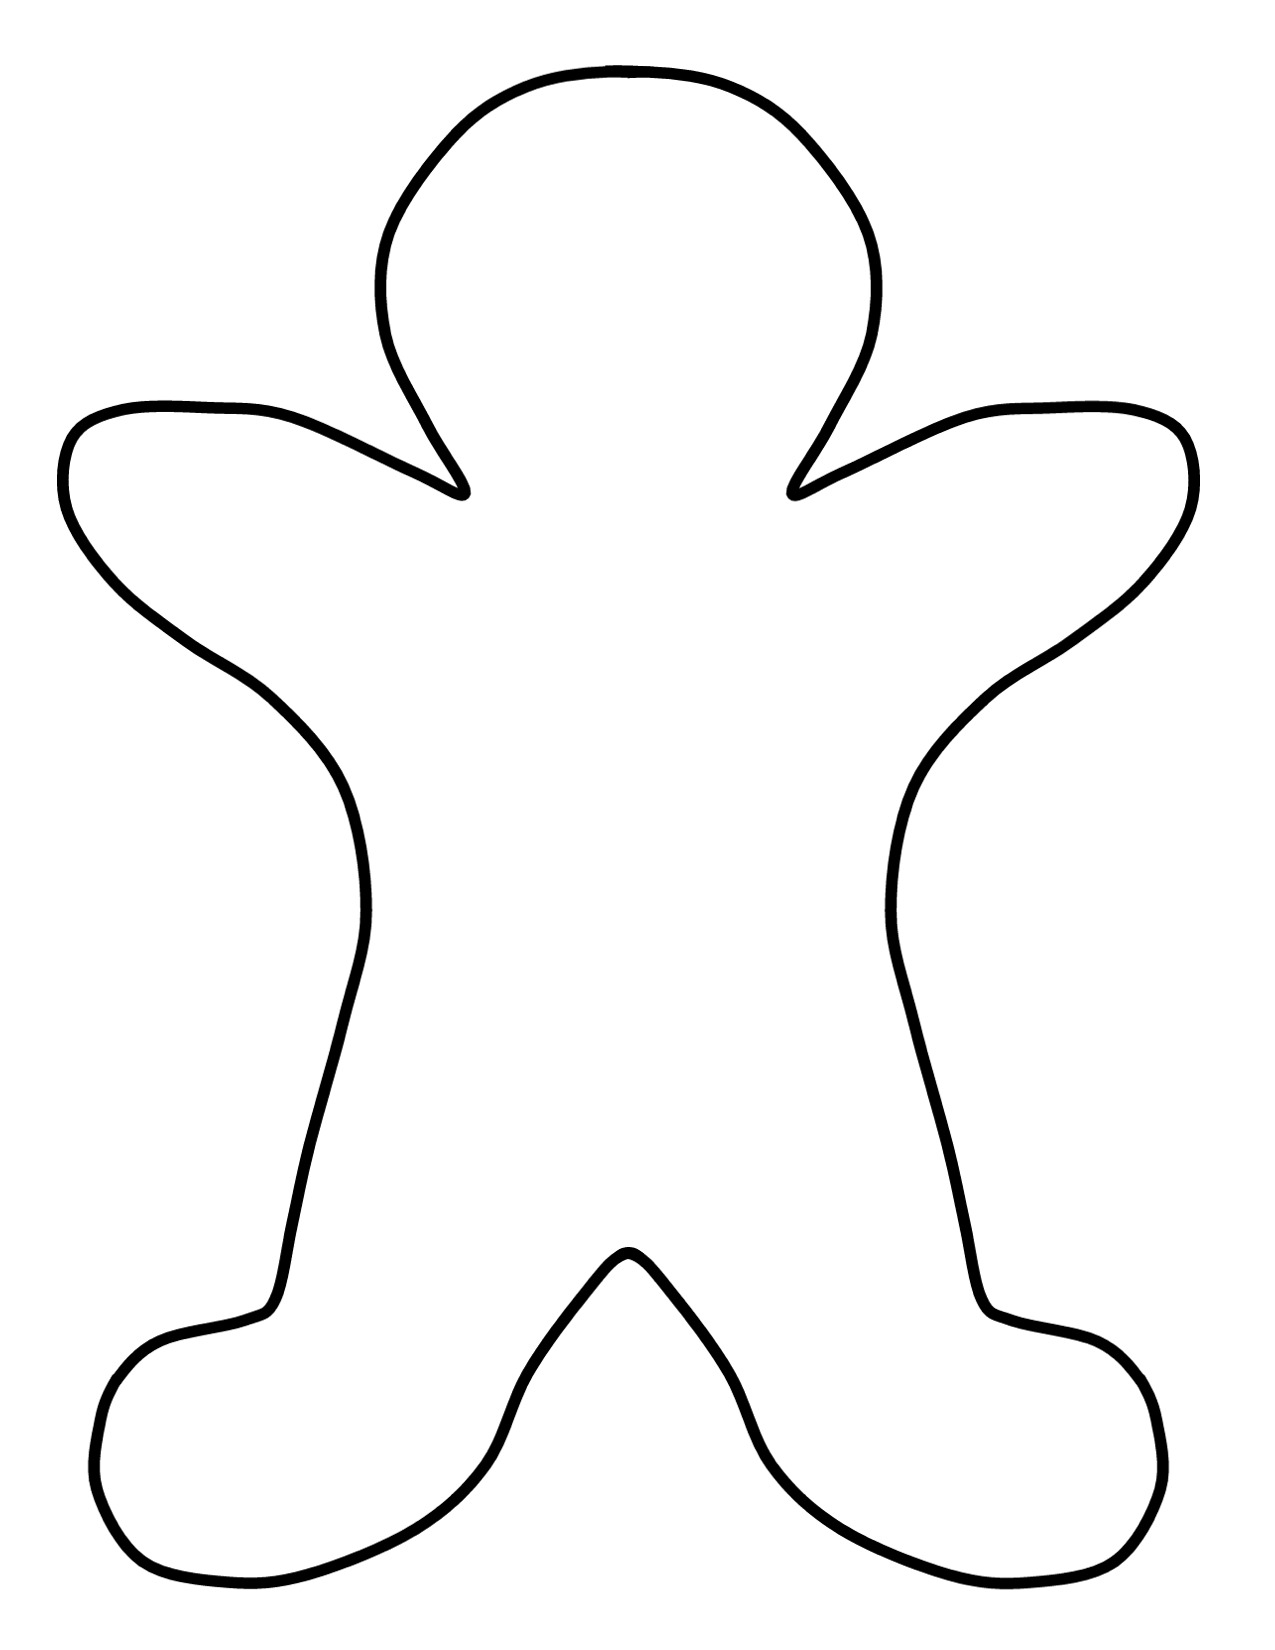 Gingerbread man outline clip art